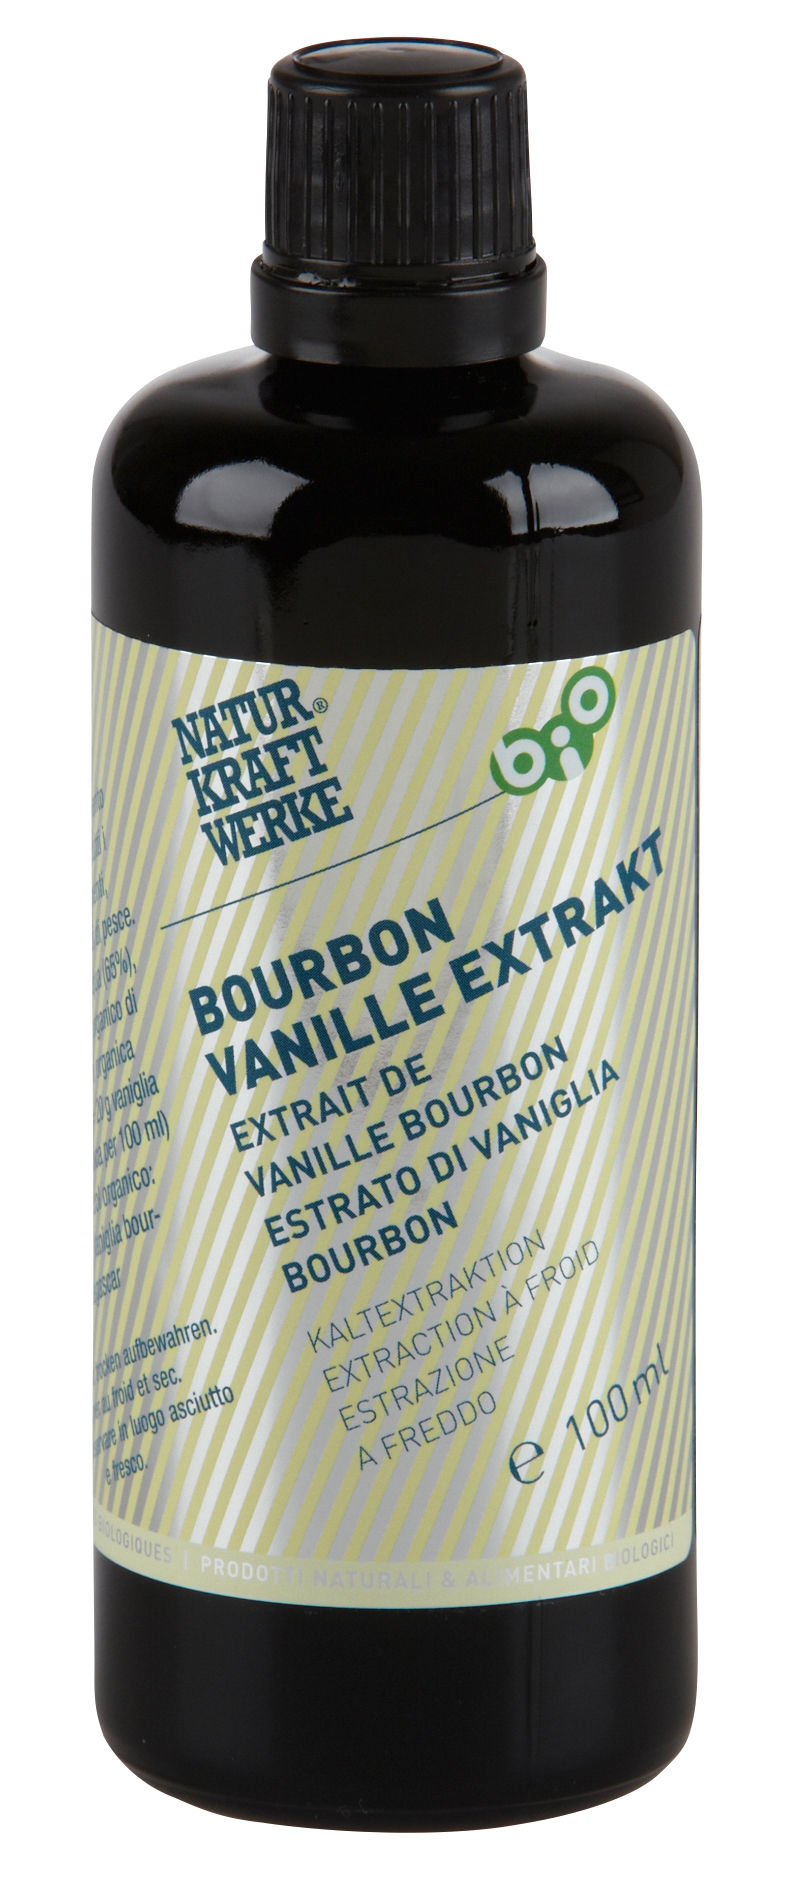 NKW Bourbon Vanille Extrakt 100ml Bio